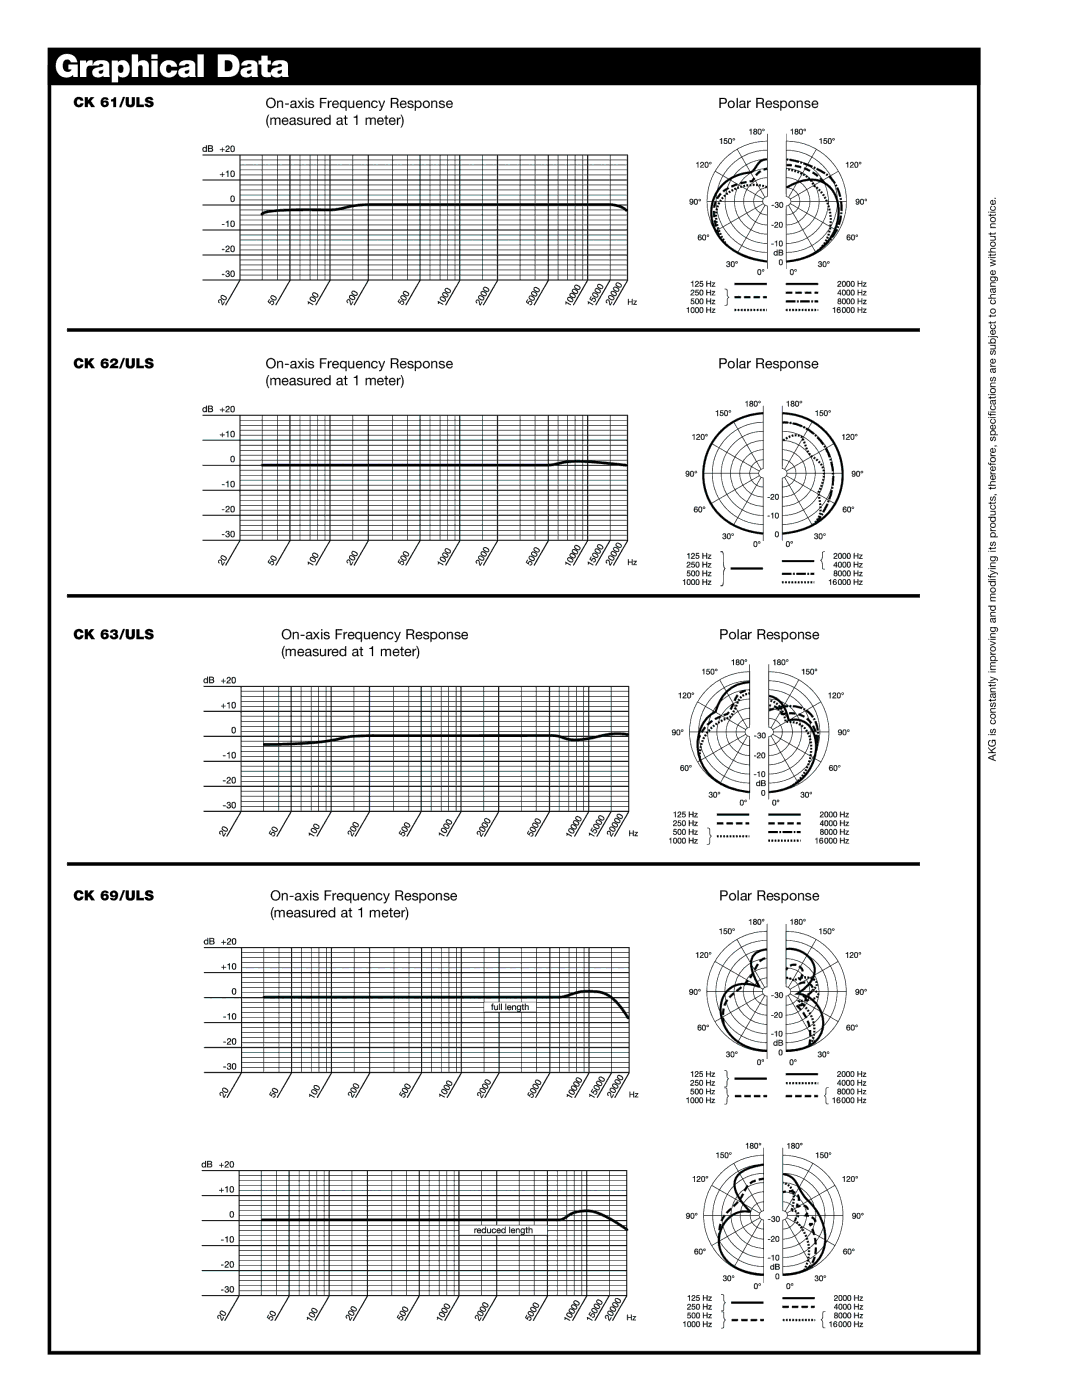 AKG Acoustics ULS SERIES manual Graphical Data 